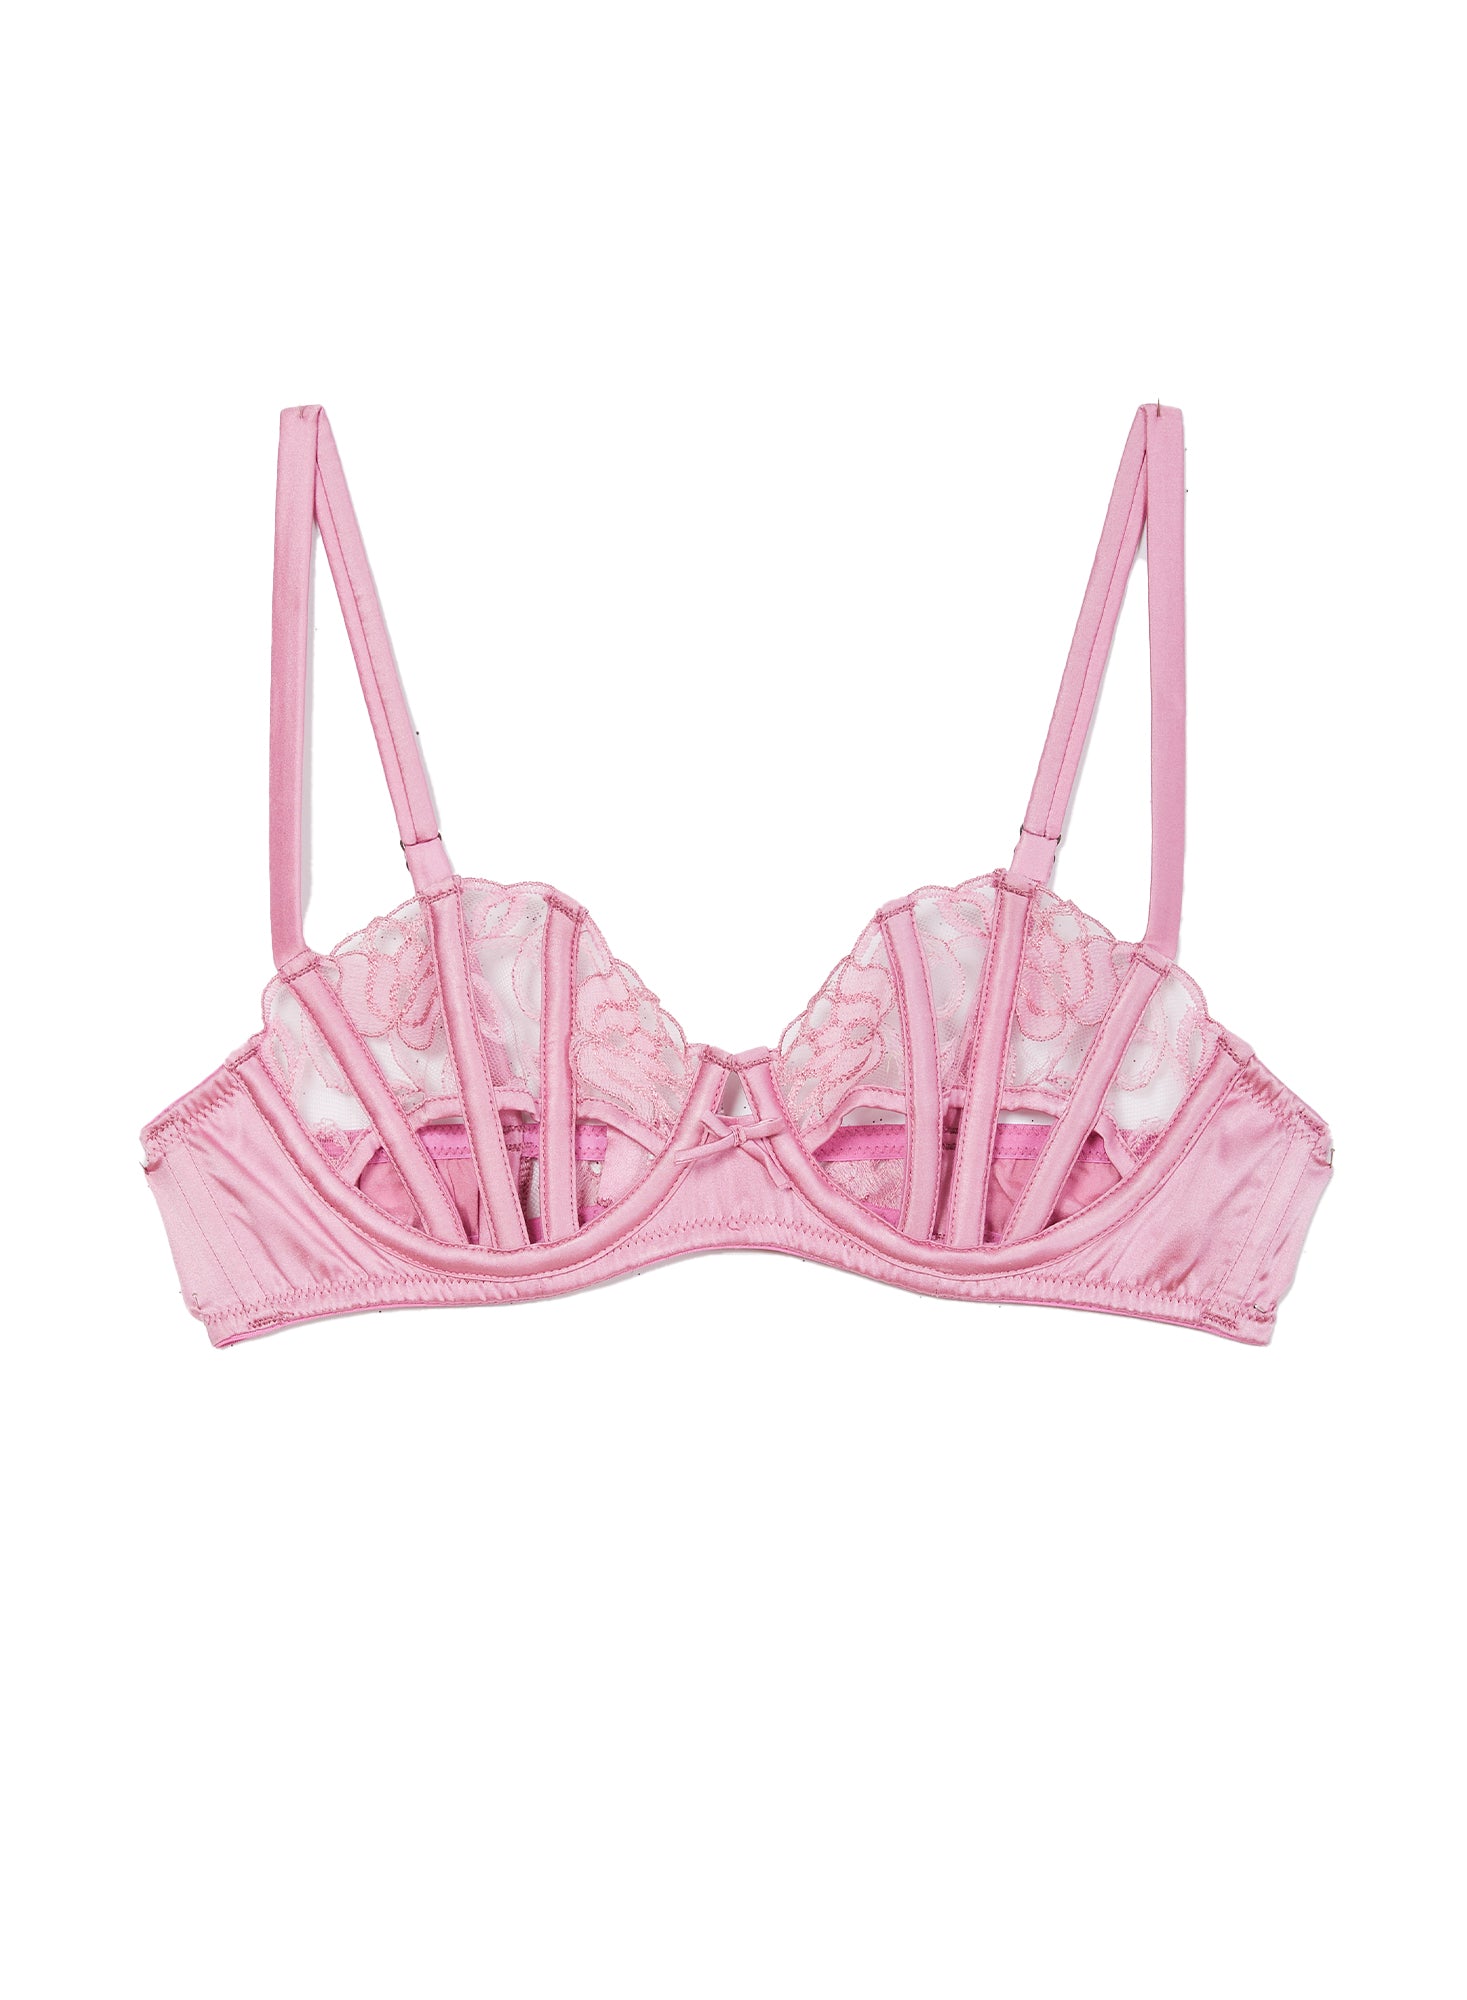 Buy Vintage Pink Satin Bra Garter Lace Rhinestone Set 34B Online